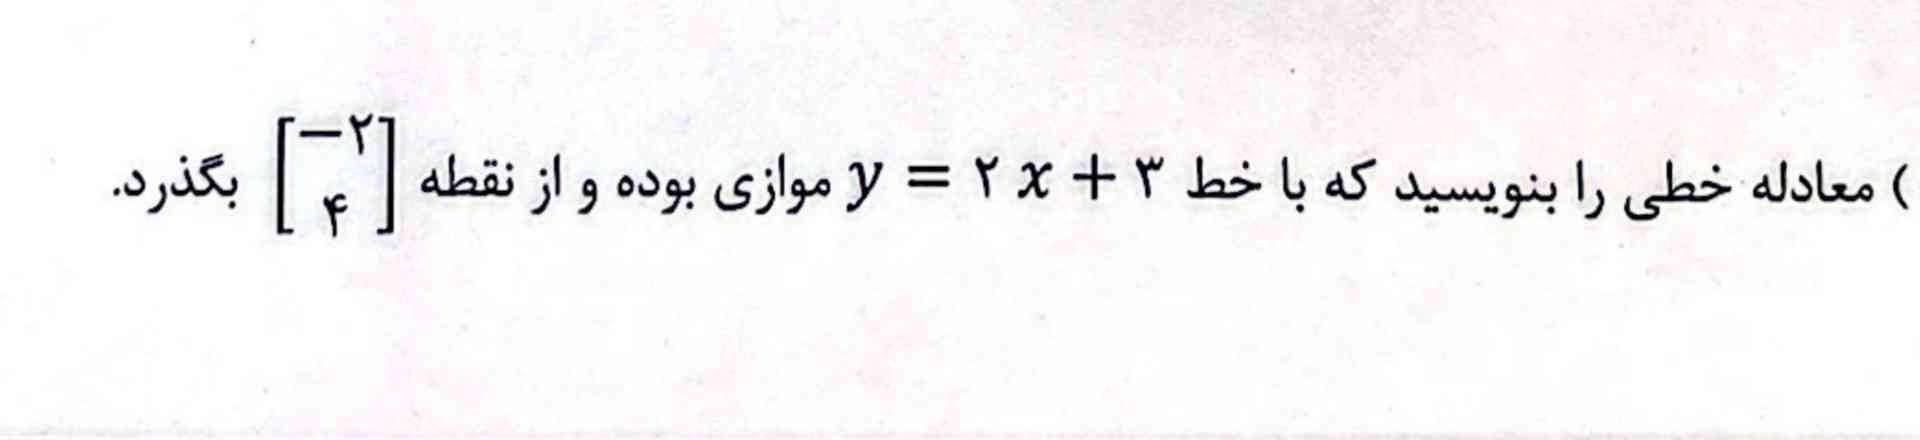 از کجا بفهمیم کدوم معادله خط رو باید بنویسیم؟؟؟